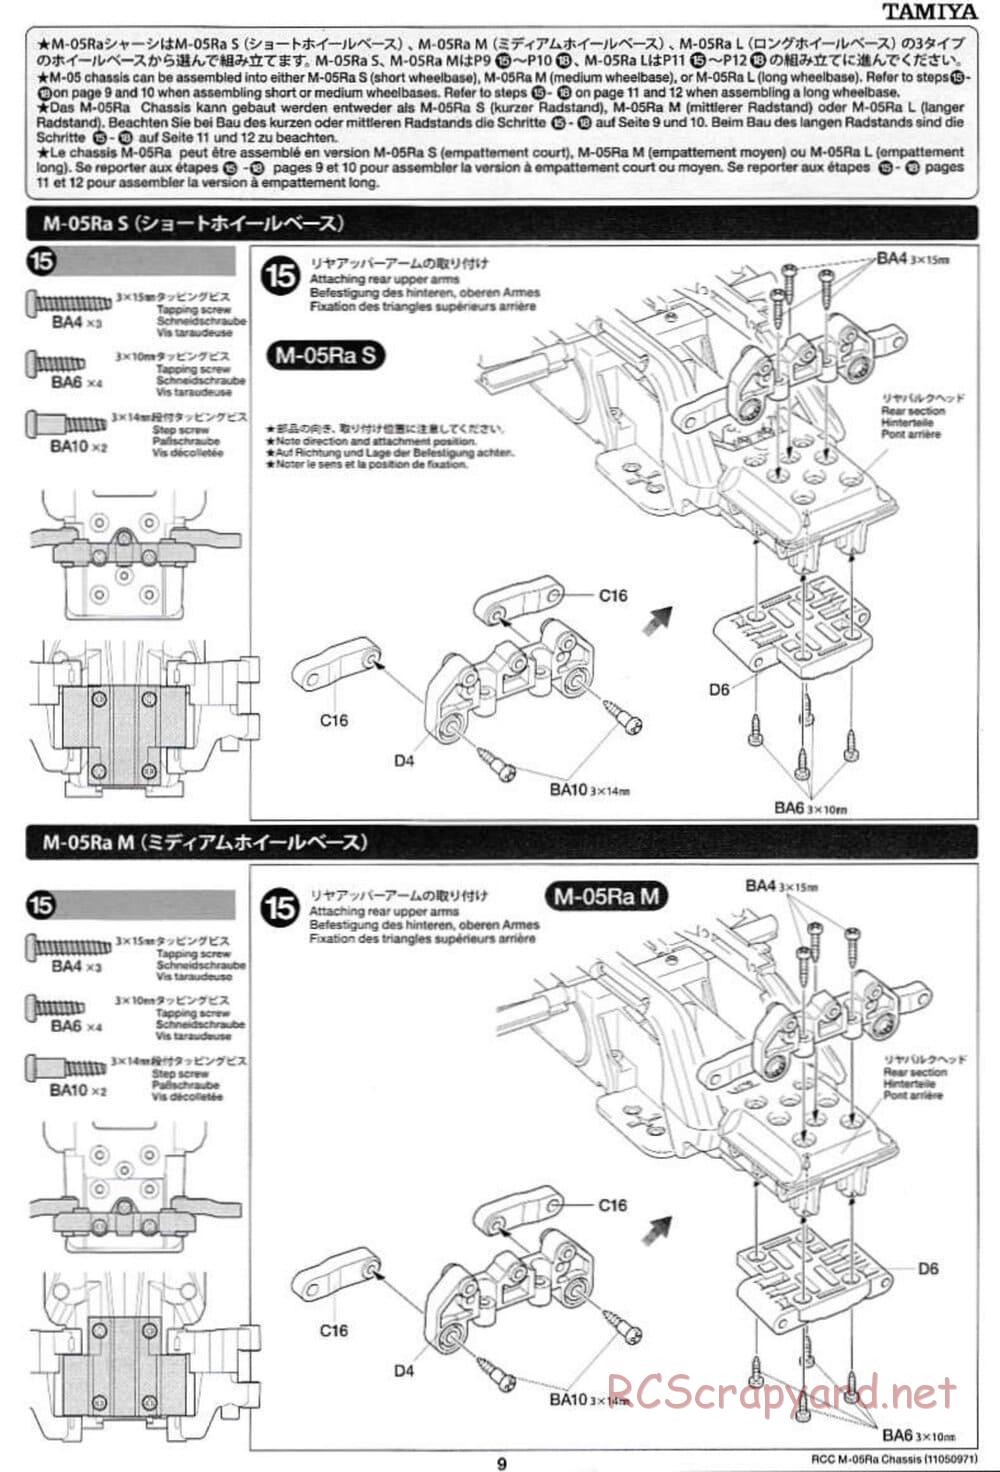 Tamiya - M-05Ra Chassis - Manual - Page 9